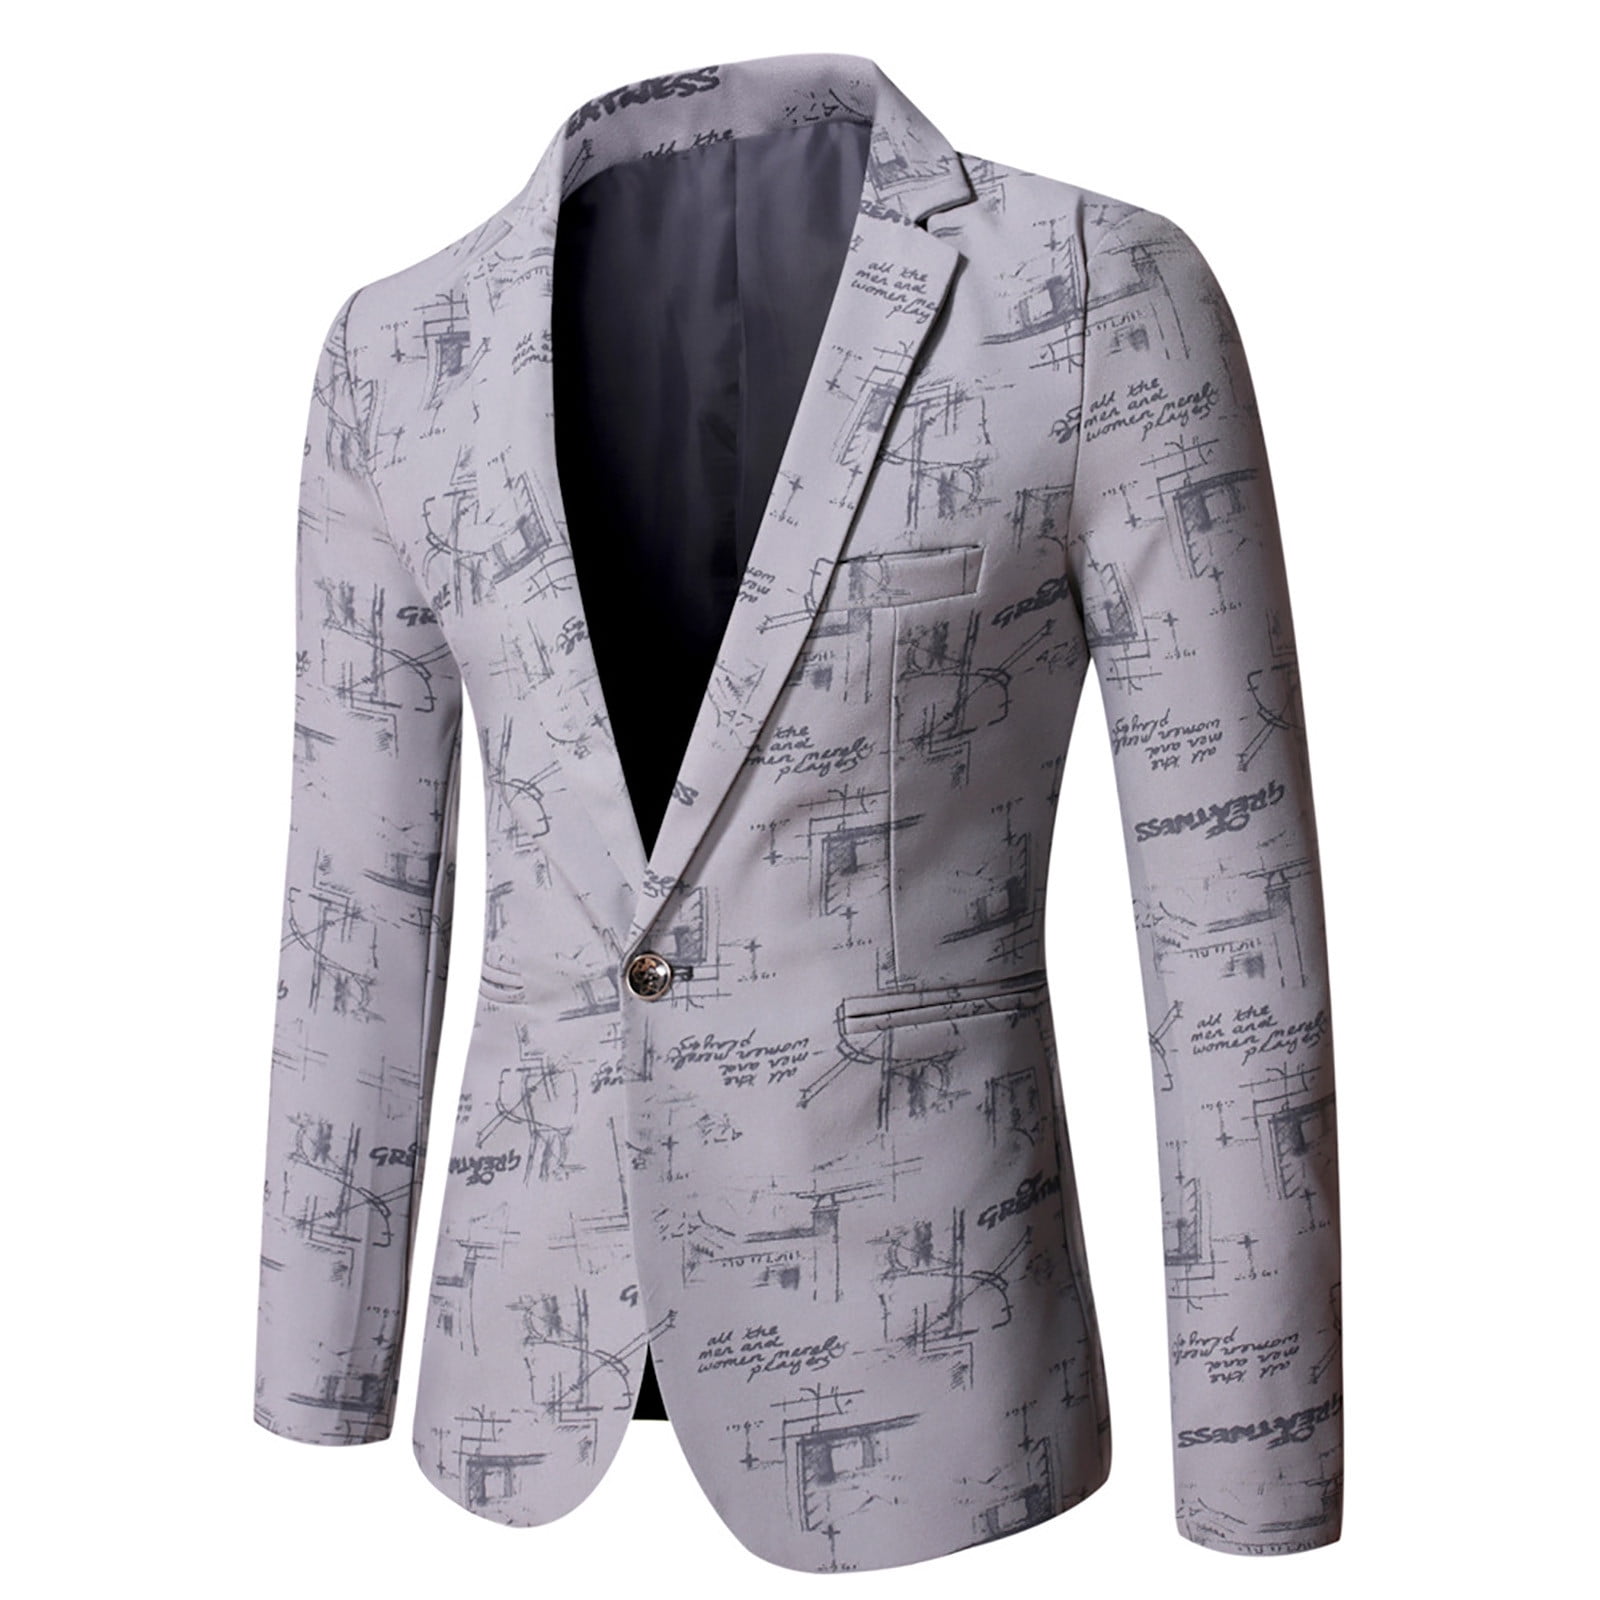 SMihono Men's Trendy Blazer Corduroy Jacket Suit Business Pocket Work  Office Lapel Collar Formal Button Front Stretch Suit Coat Prom Wedding Long